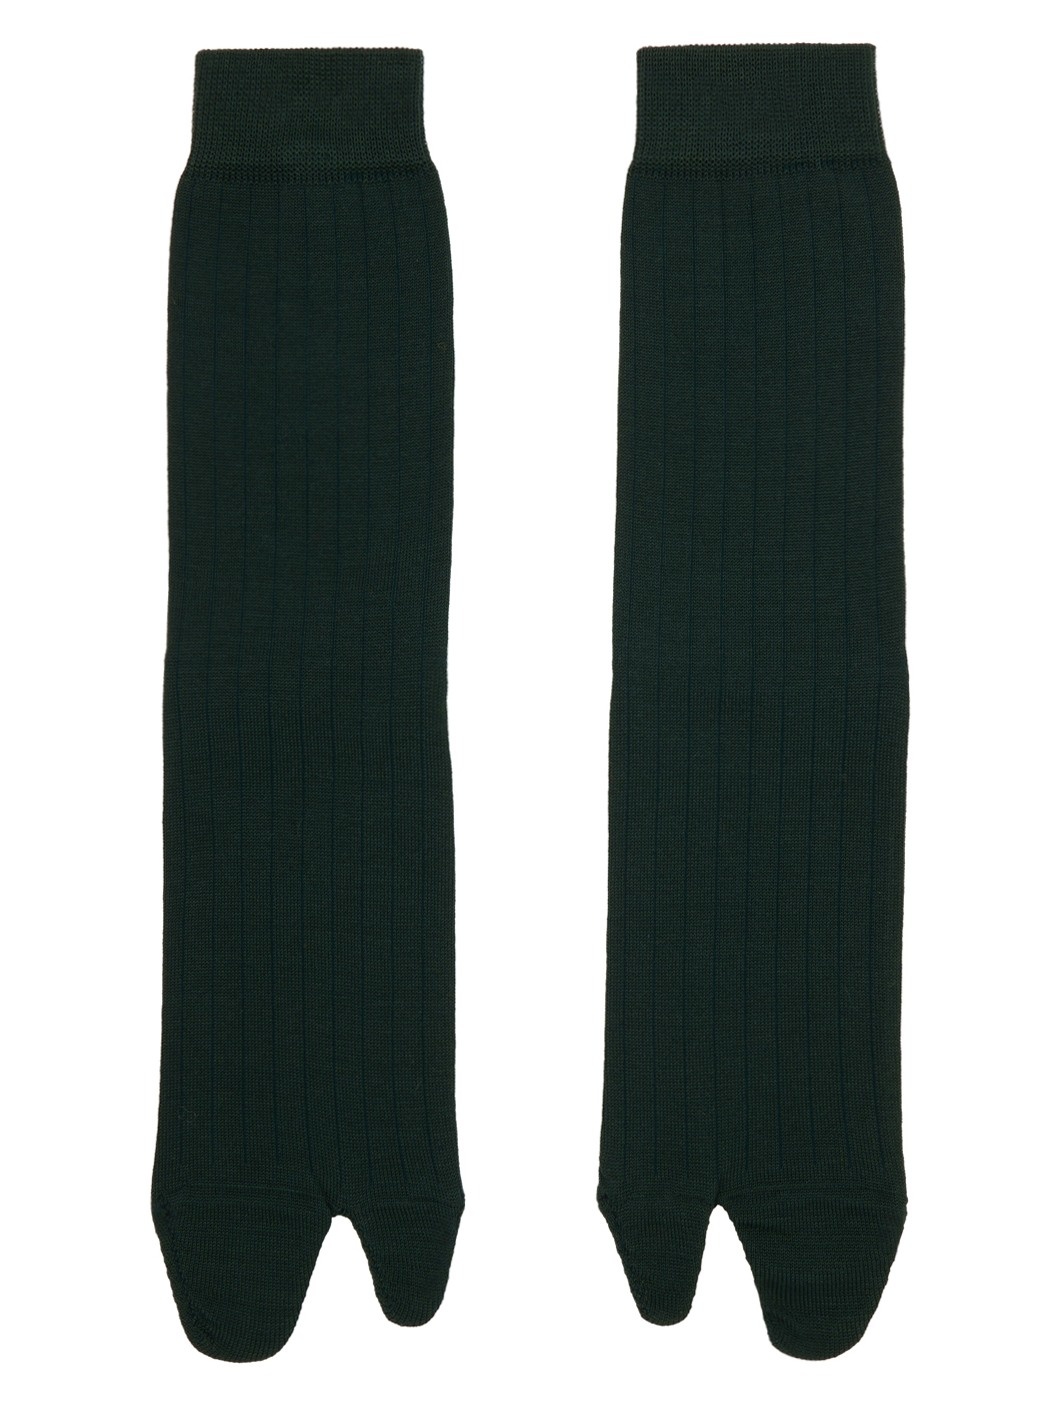 Green Bootleg Socks - 1